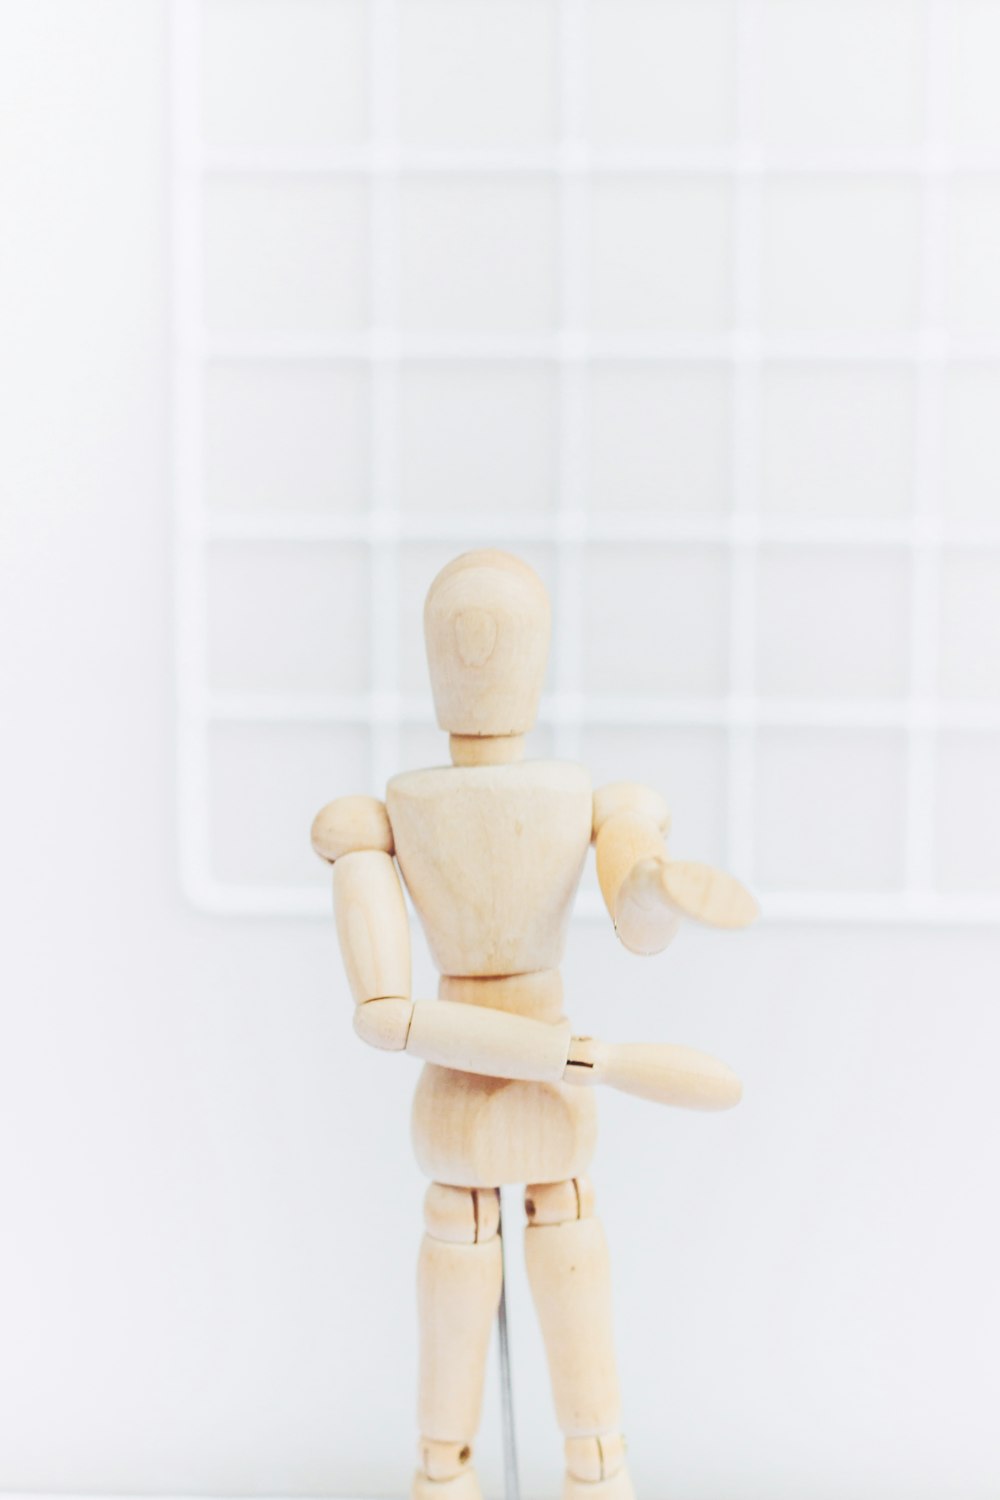 brown wooden human figurine on white background